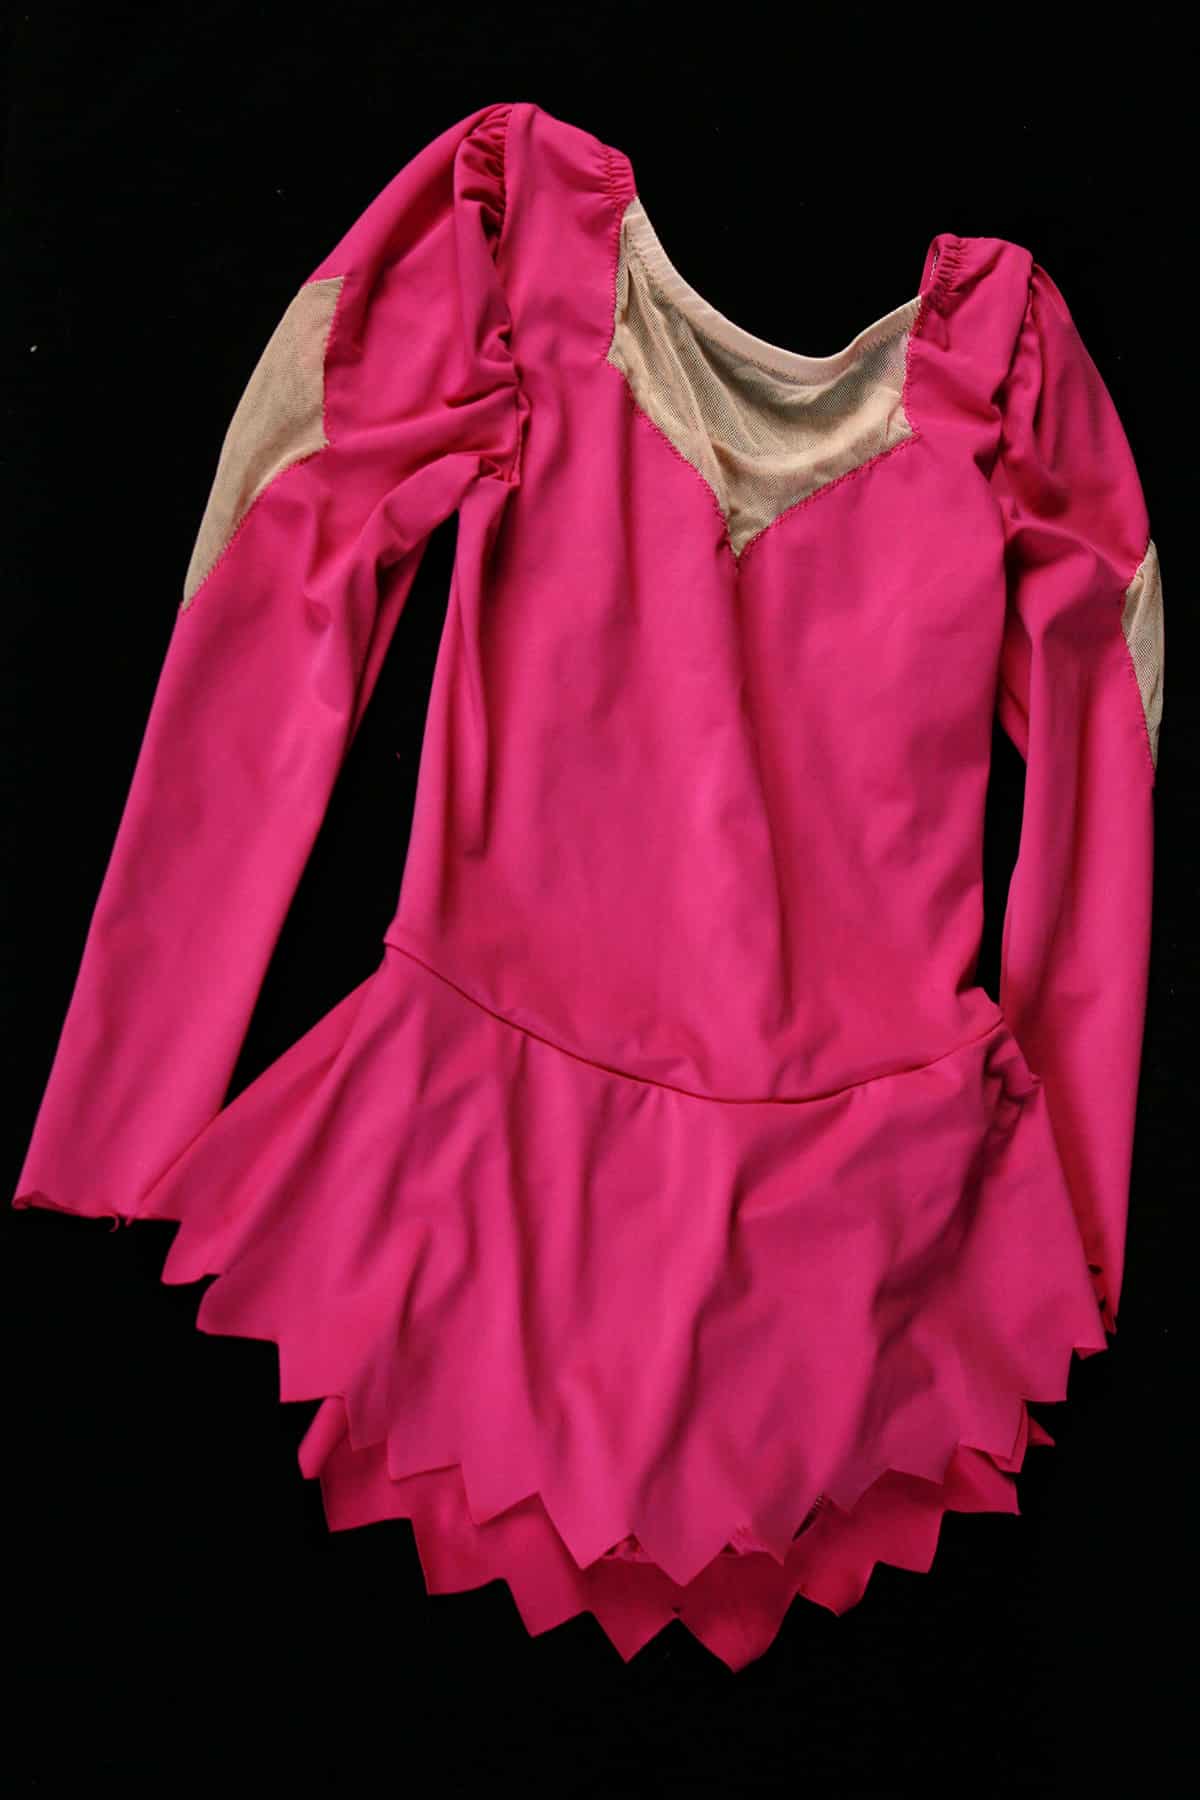 A hot pink skating dress with a jagged cut hem.